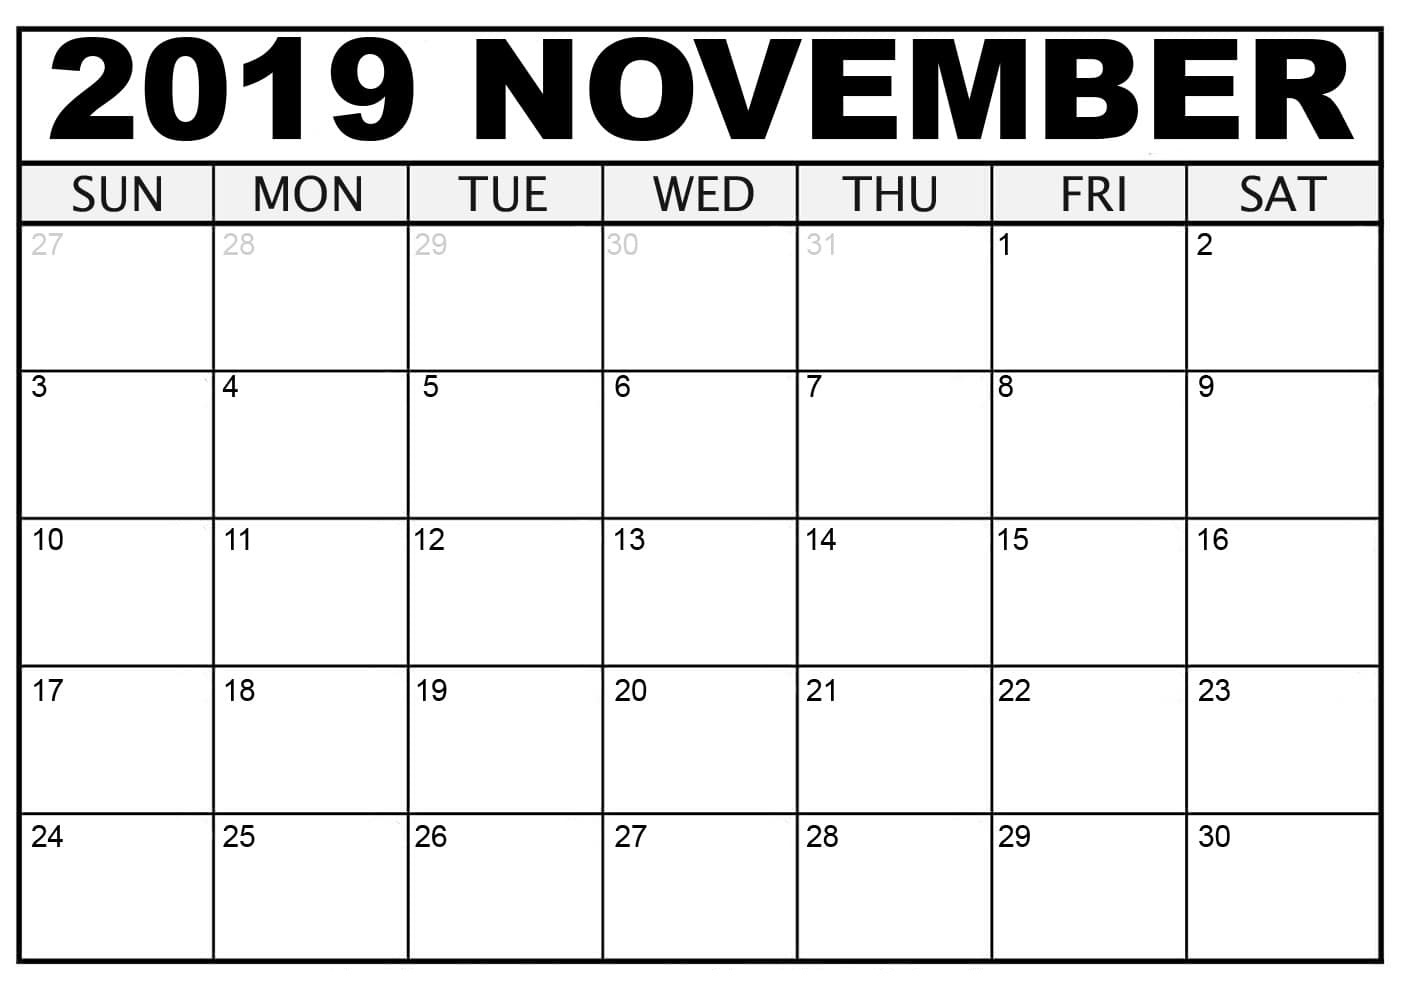 November 2019 Printable Calendar - Free Blank Templates